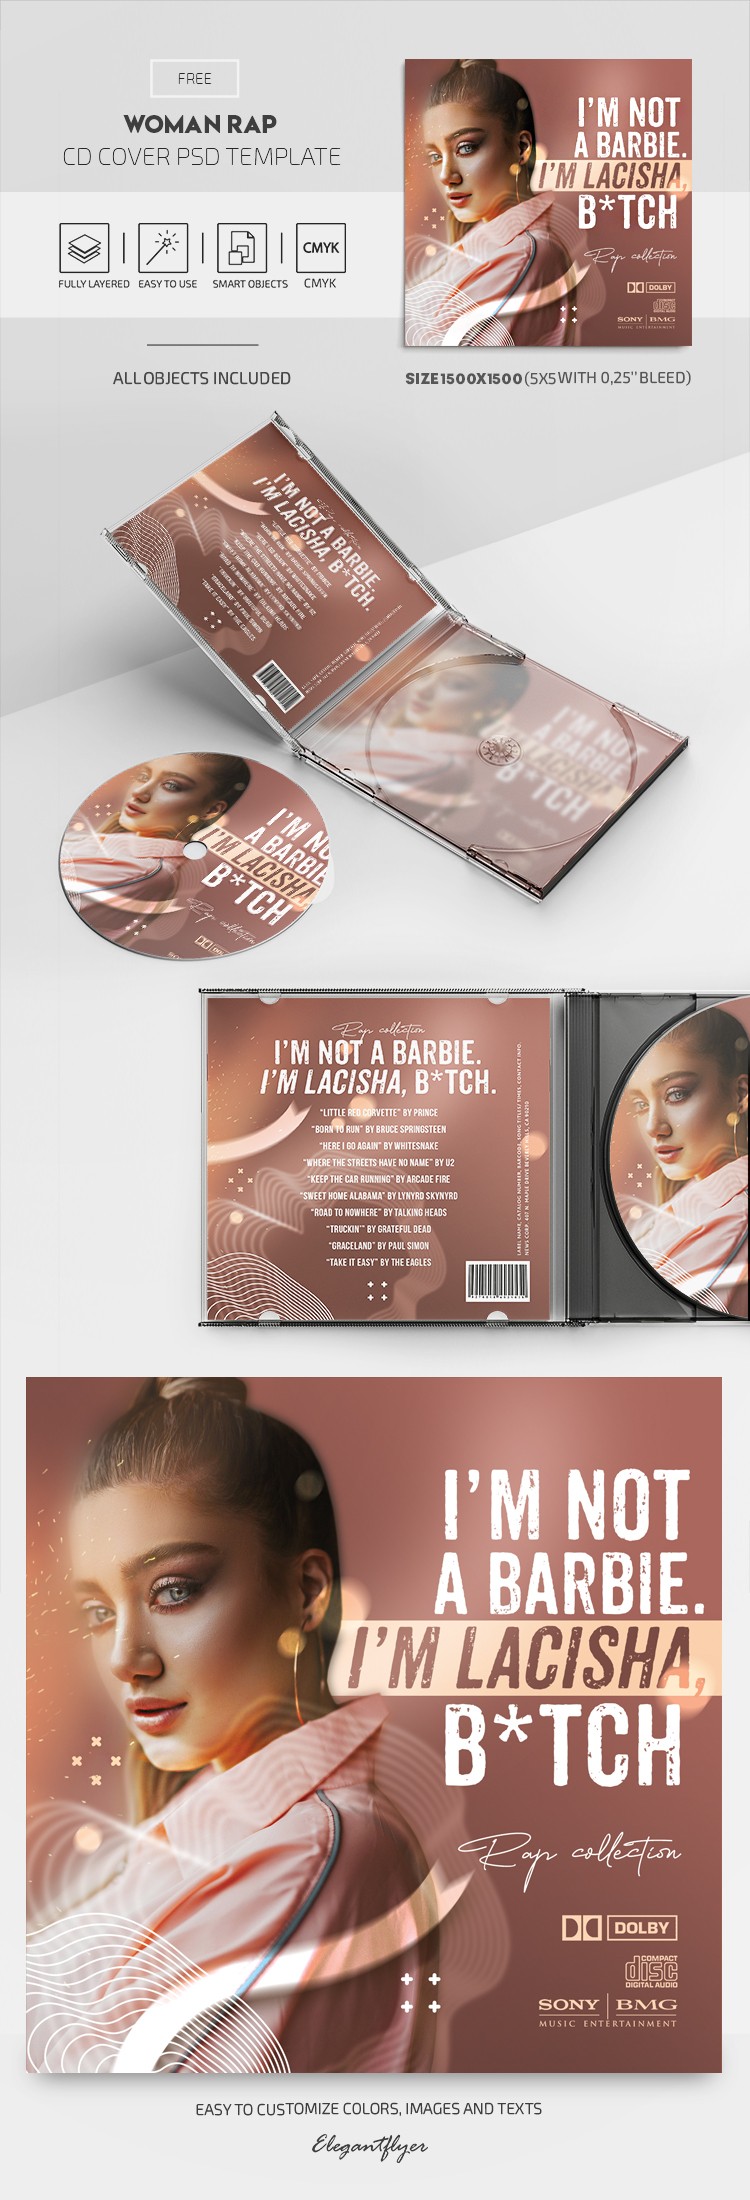 Woman Rap CD Cover by ElegantFlyer